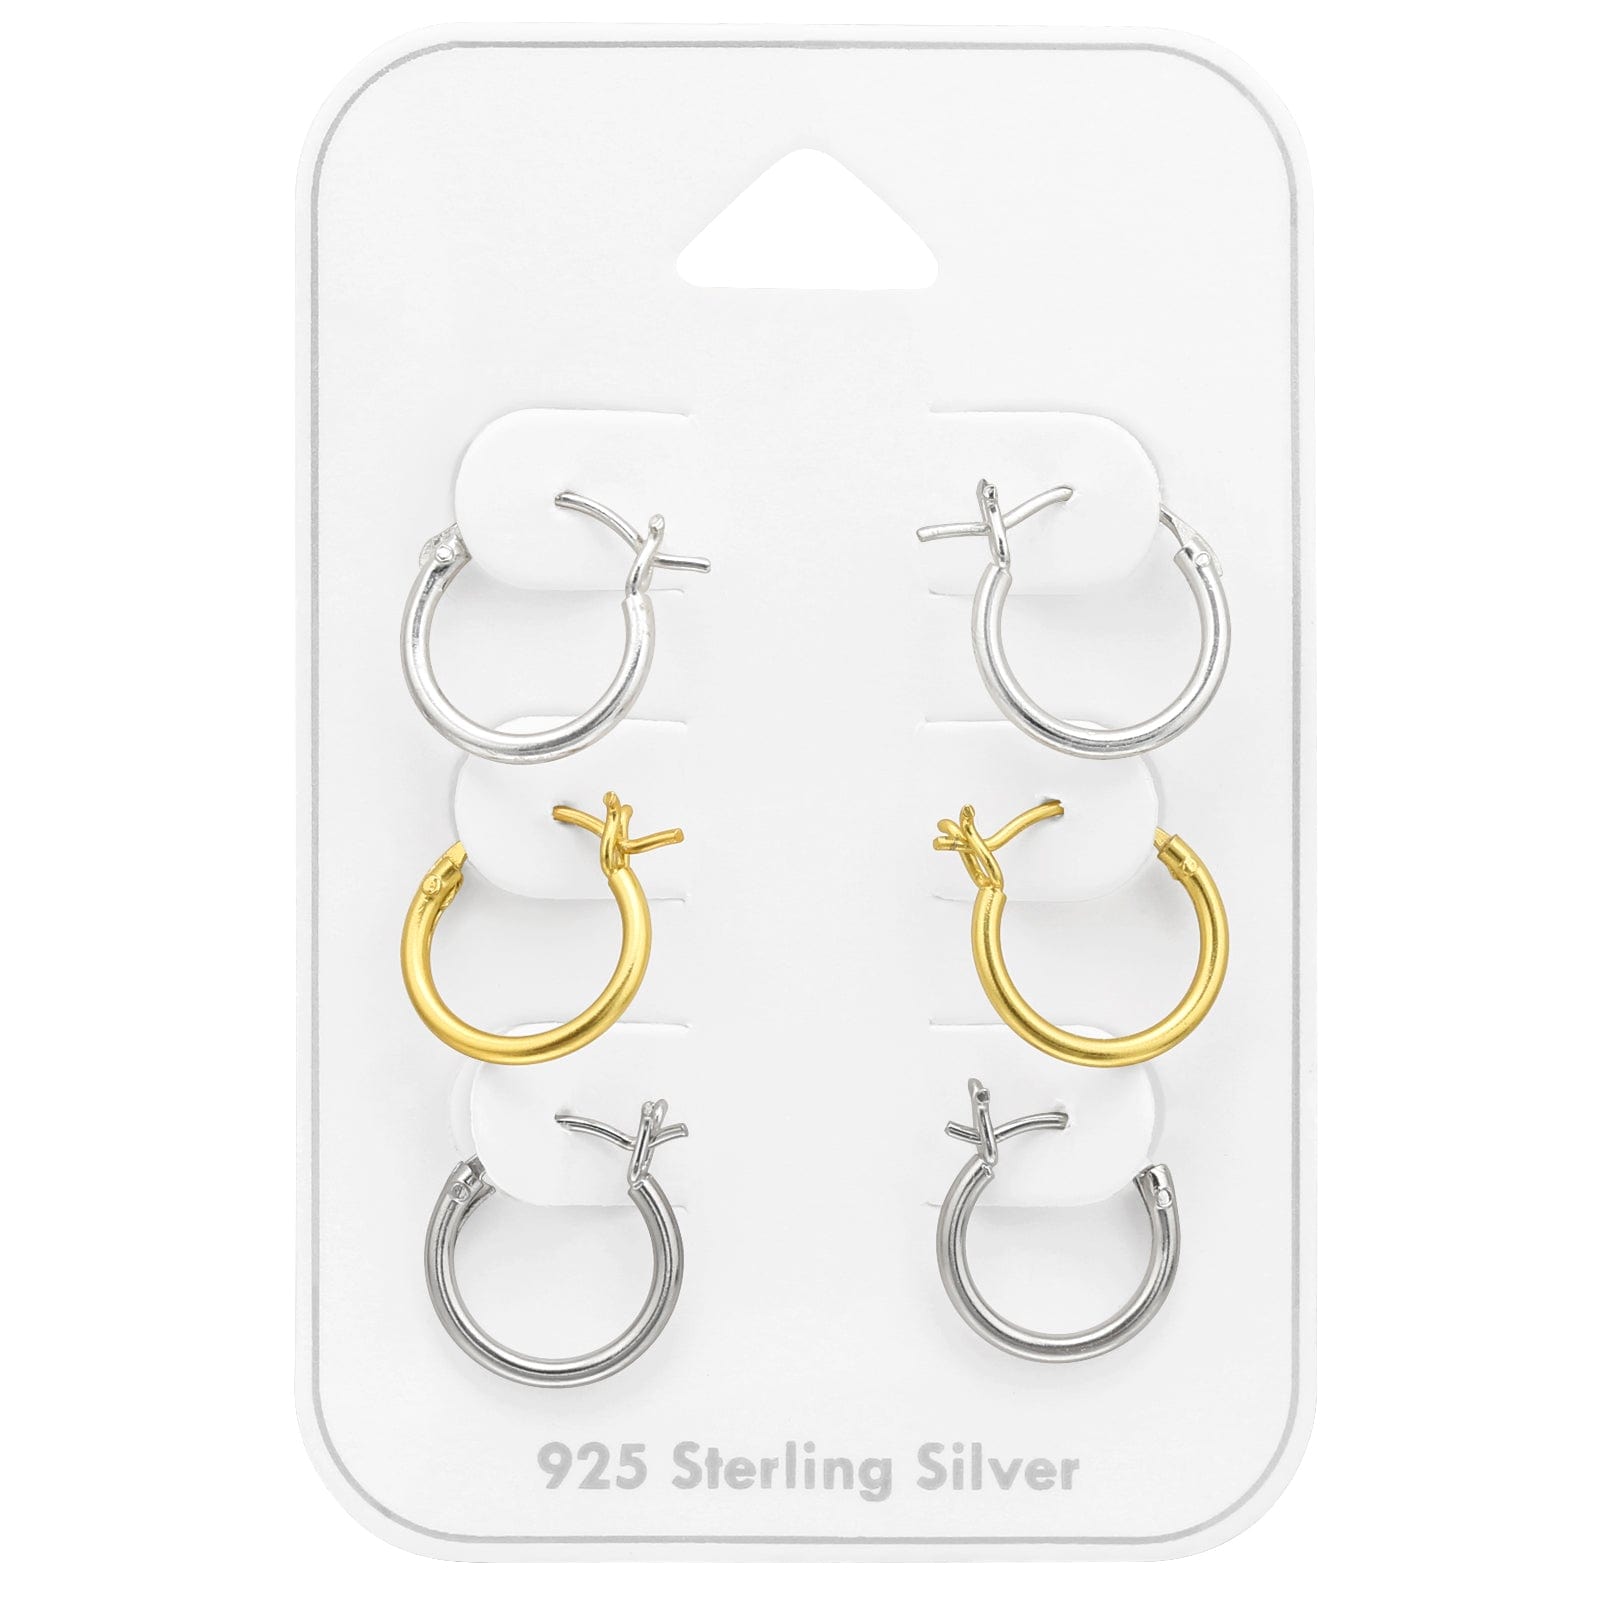 Silver French Lock Hoop Earrings Set